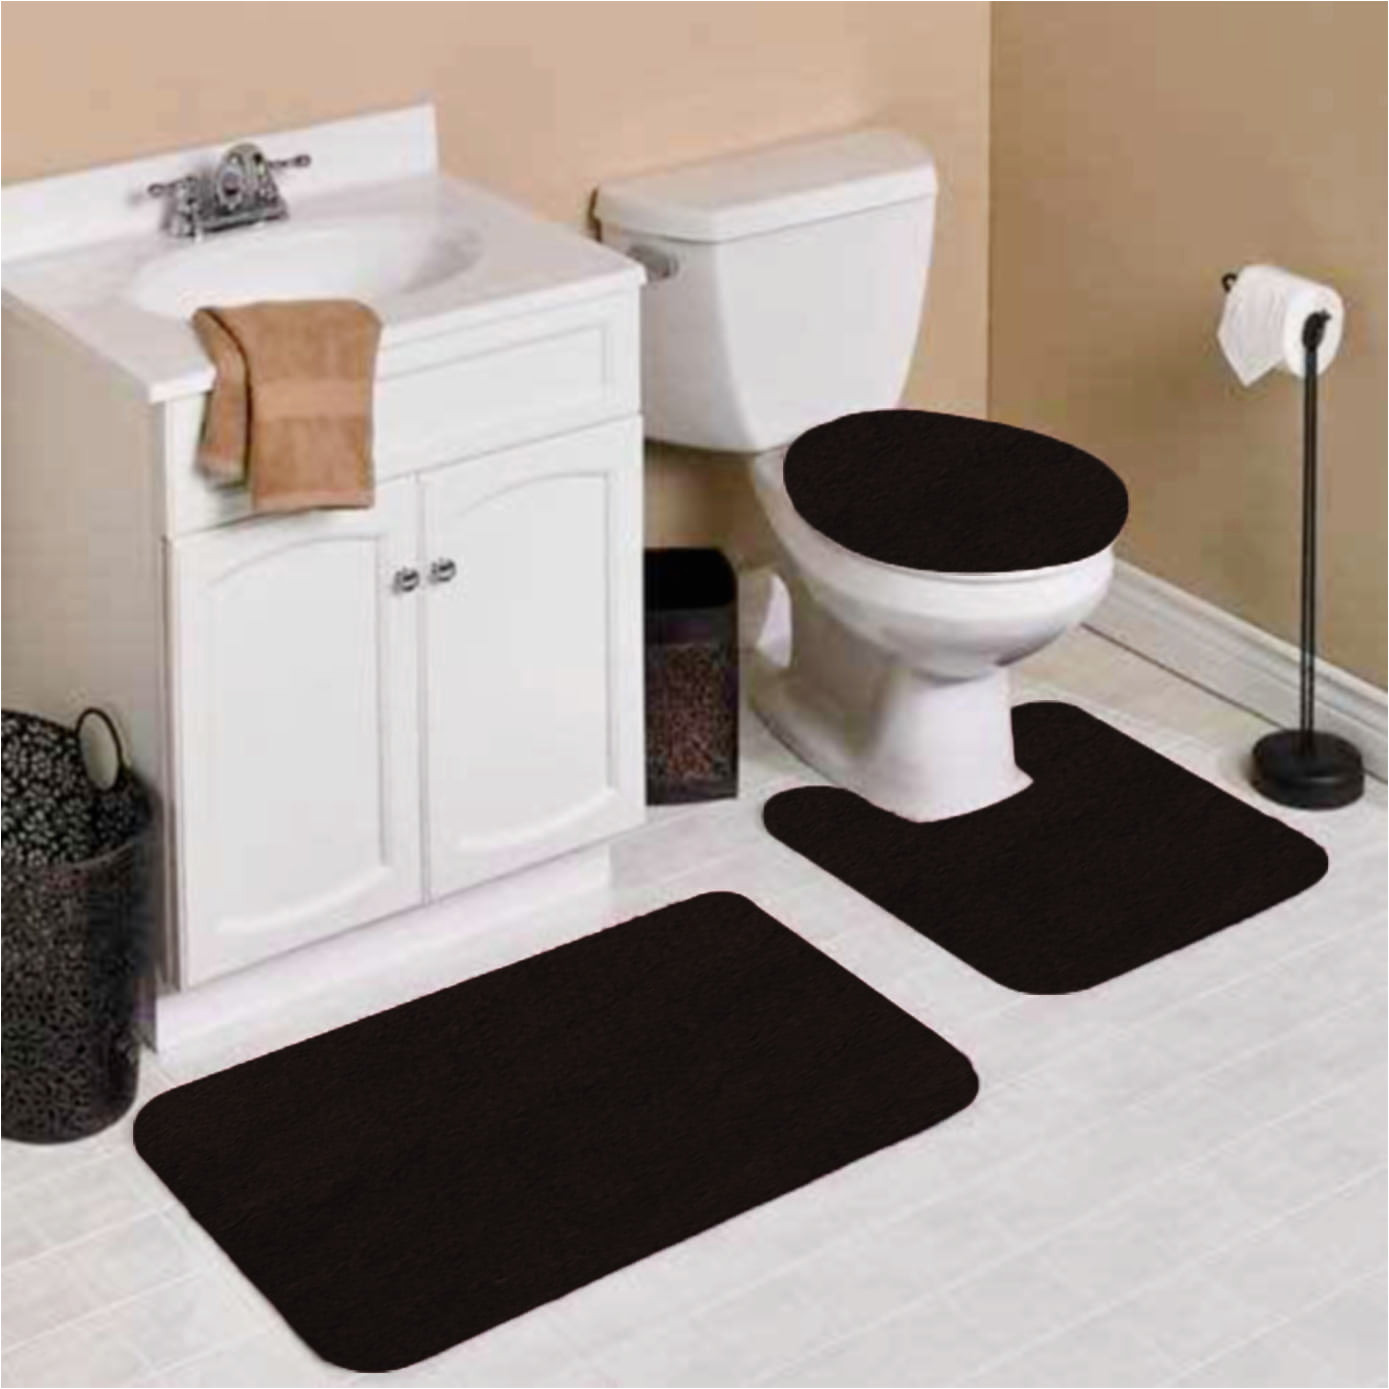 Bath Rugs and Lid Covers 3pc 5 Black Banded Bathroom Set Bath Mat Countour Rug Lid Cover Plain solid Colors